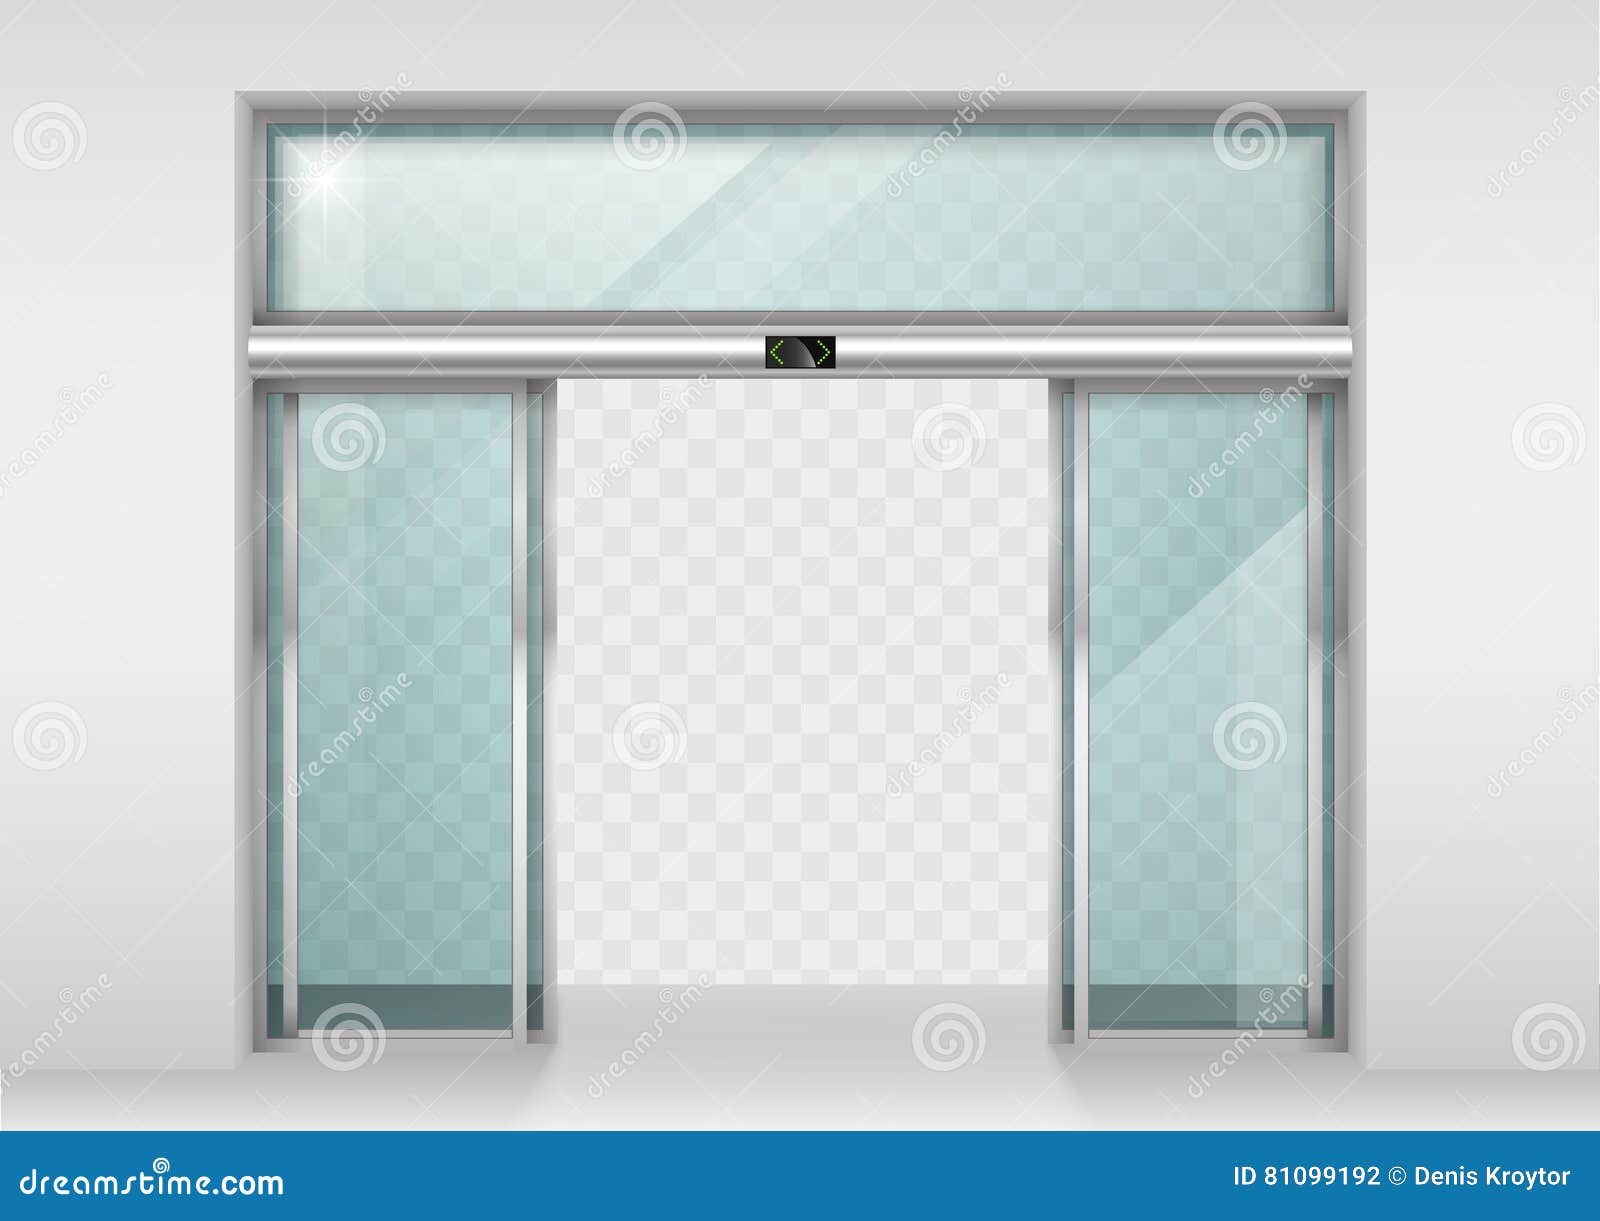 sliding glass automatic doors